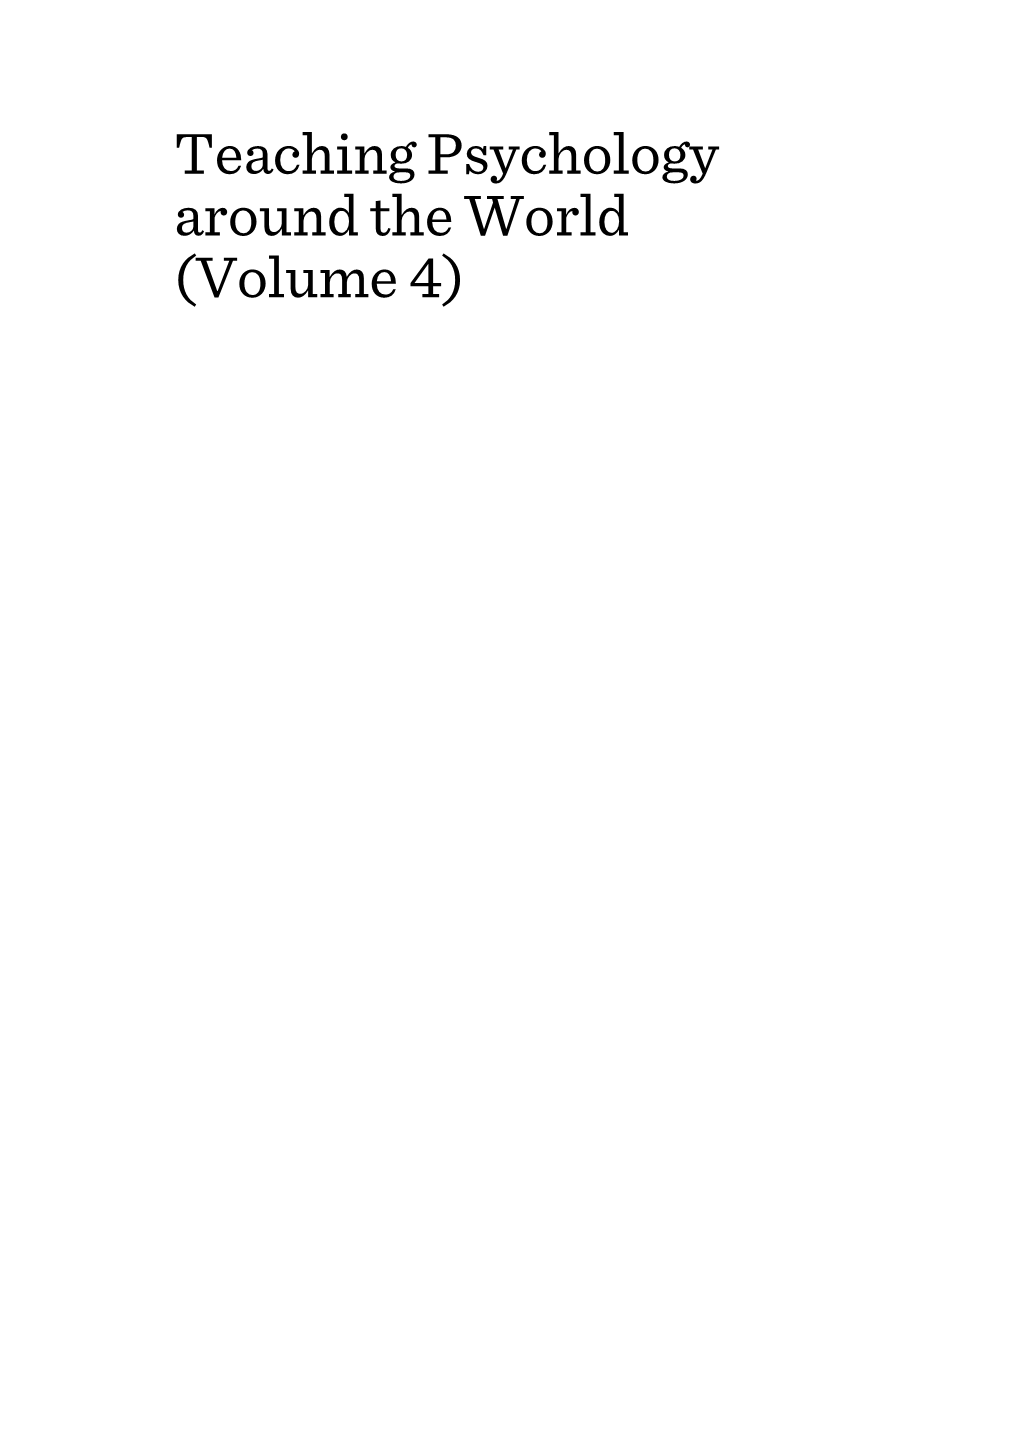 Teaching Psychology Around the World (Volume 4)